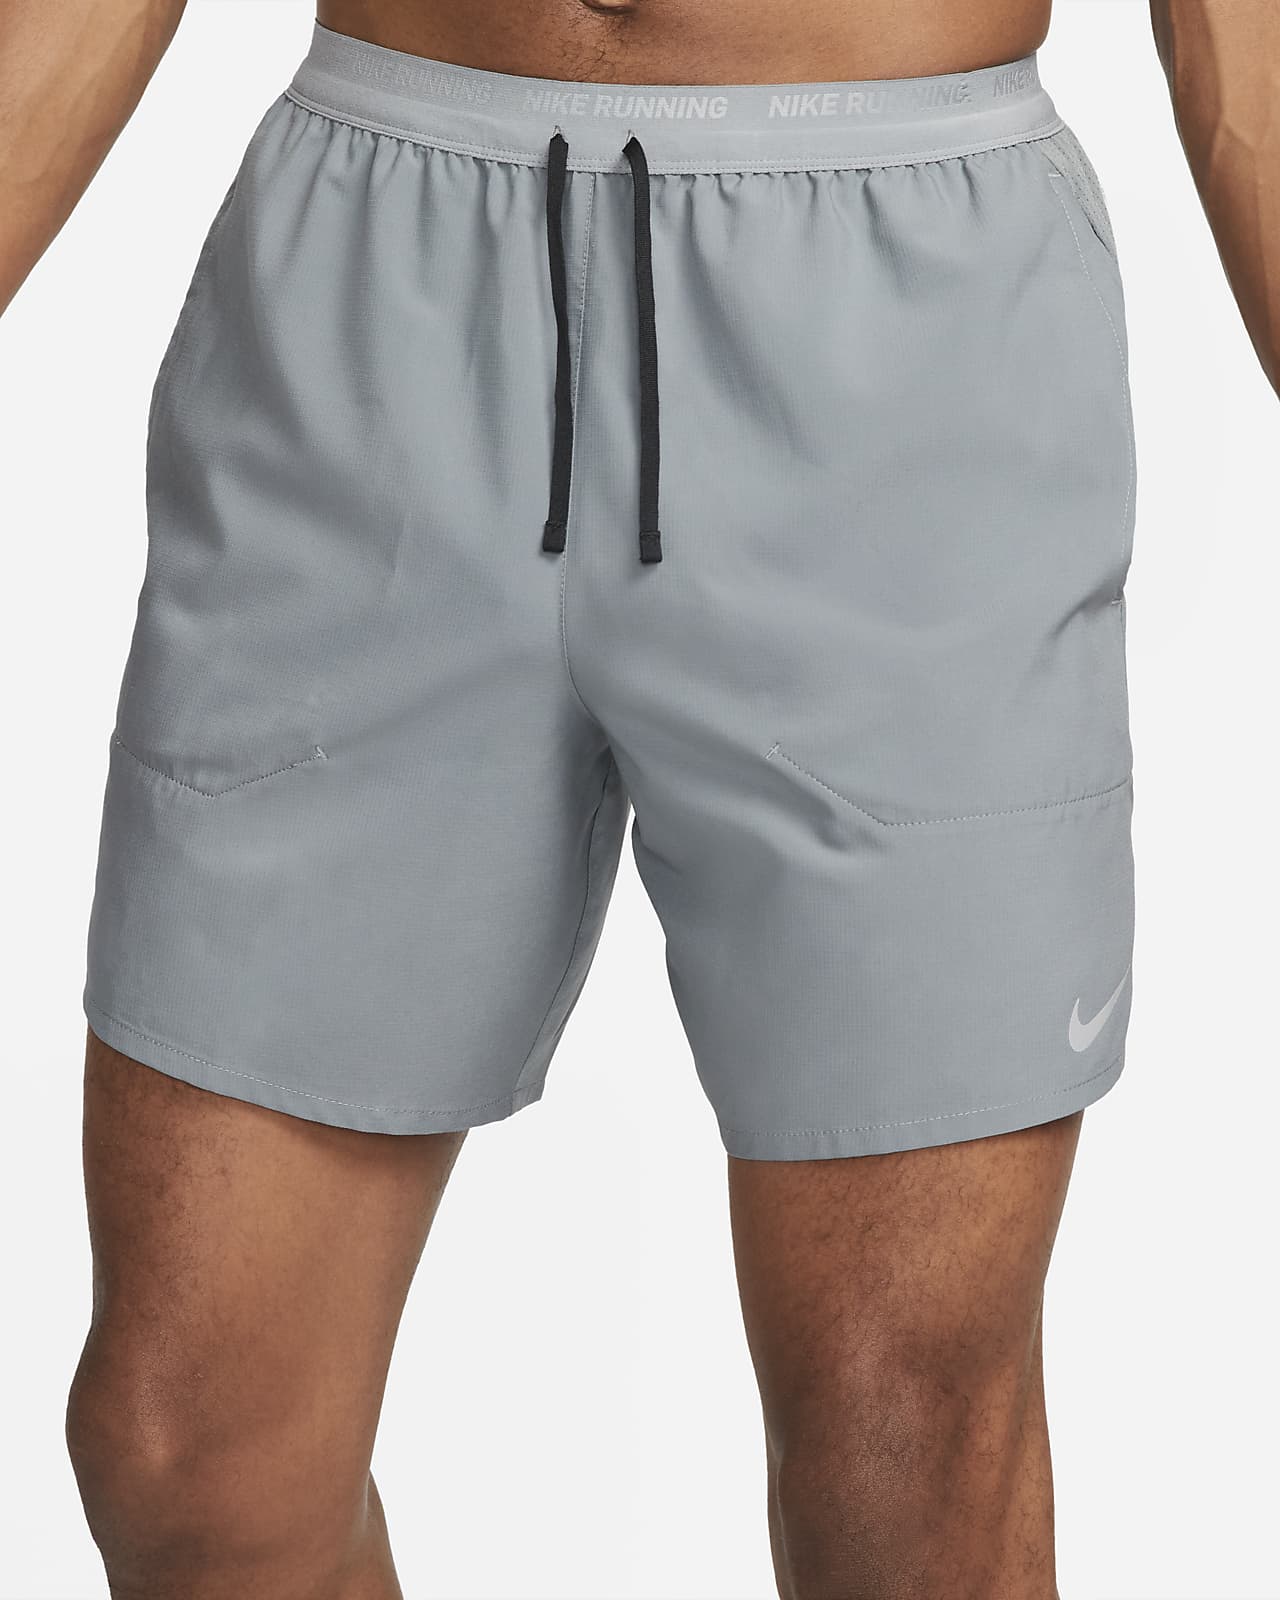 Nike, Shorts, Mens Medium Drifit Mesh Shorts No Underwear Liner